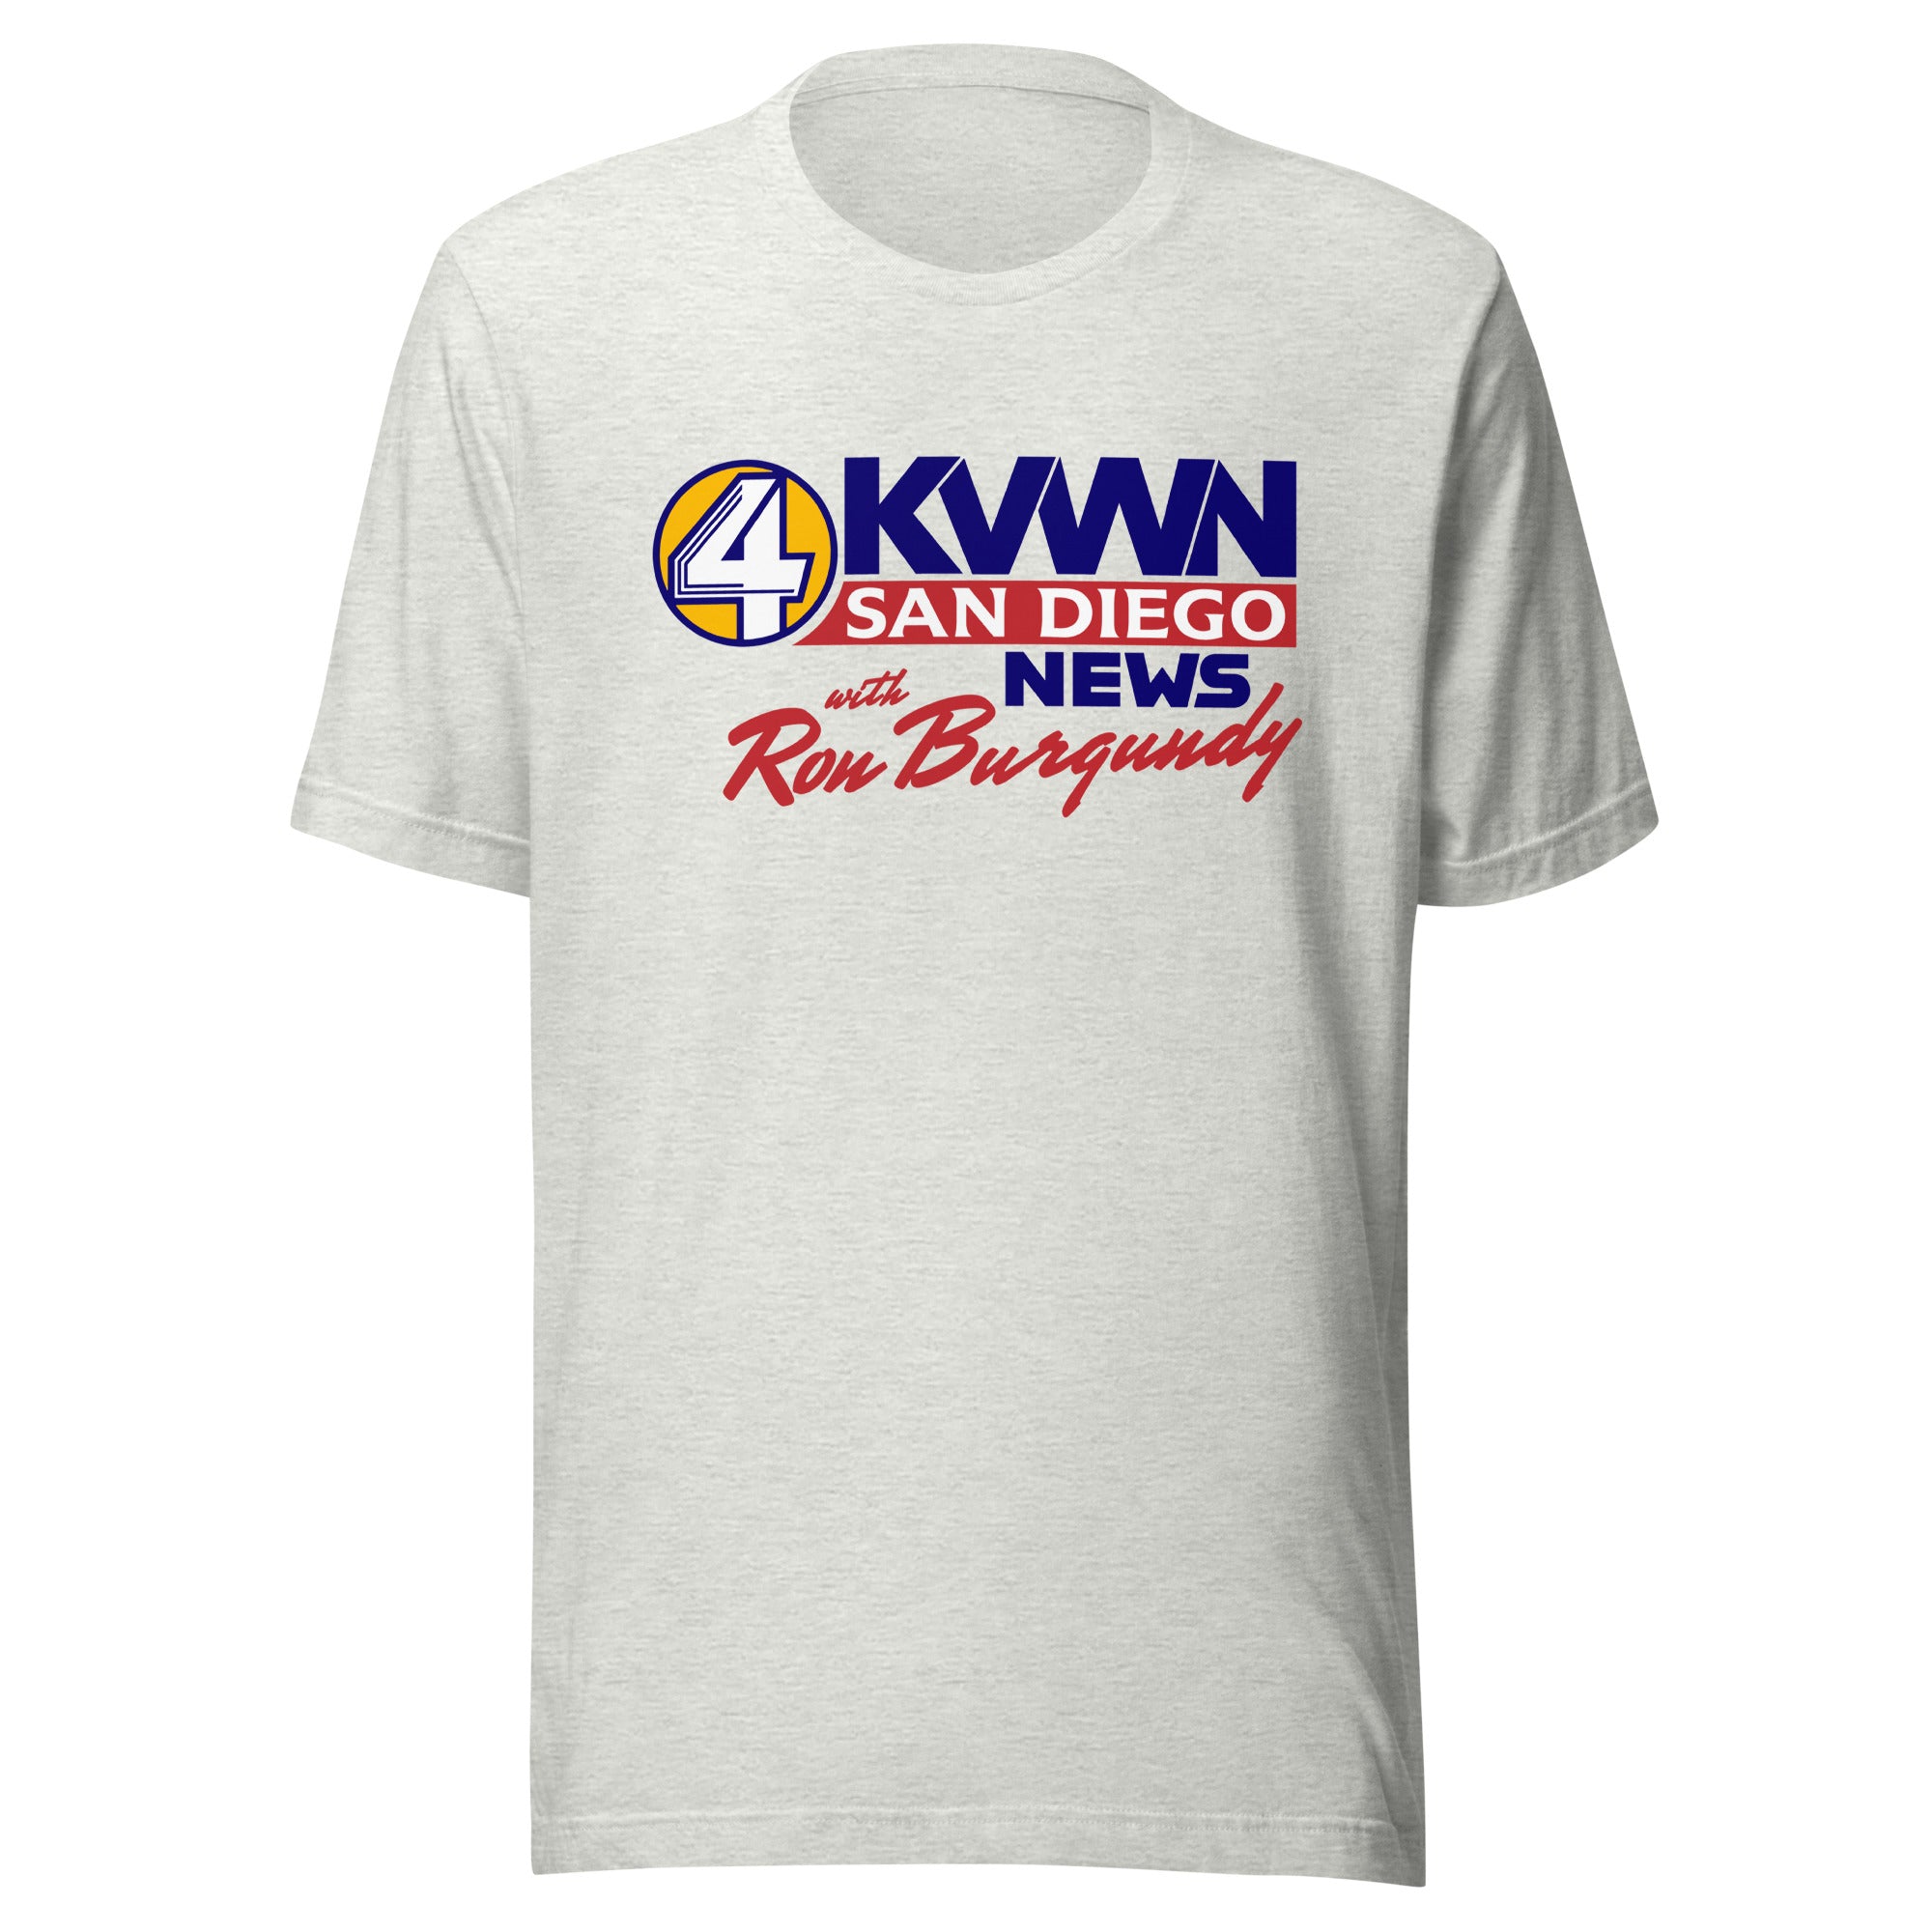 KVWN News with Ron Burgundy Shirt